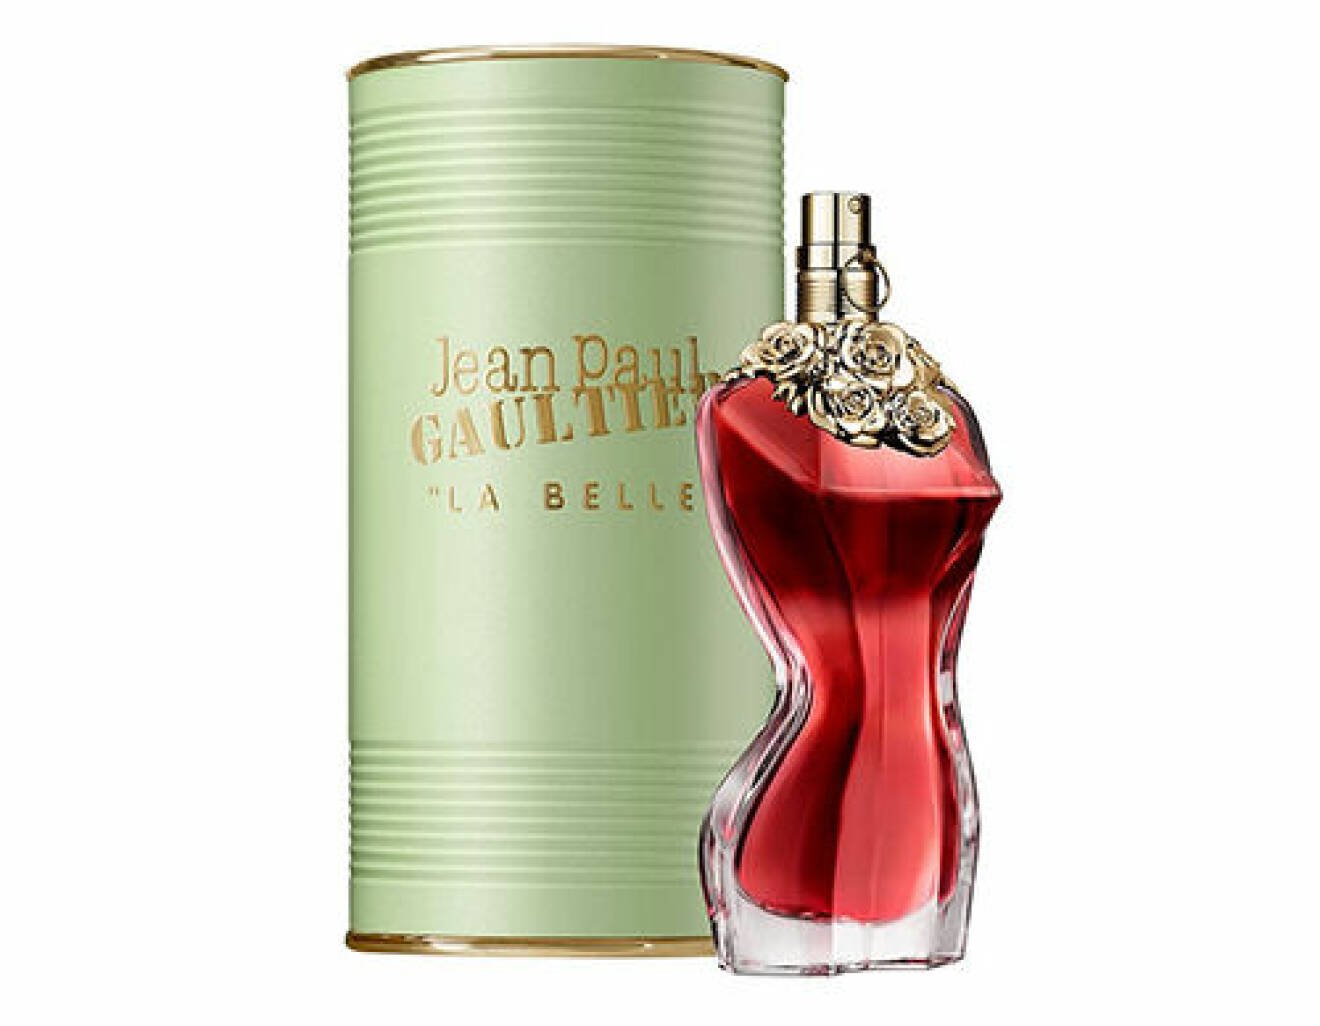 Parfym La Belle från Jean Paul Gaultier för dam